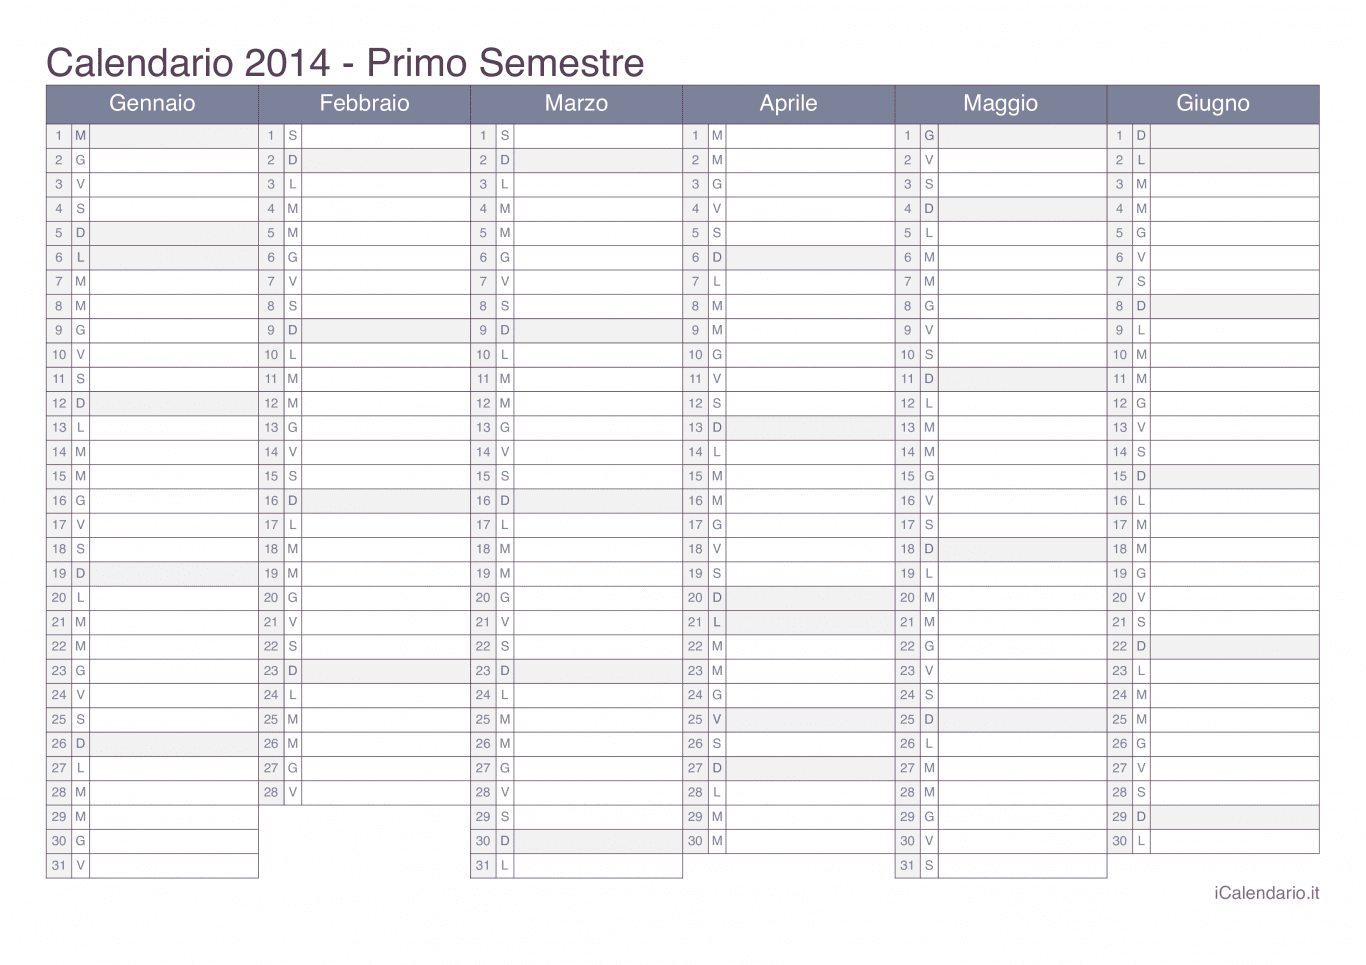 Calendario semestrale 2014 - Office